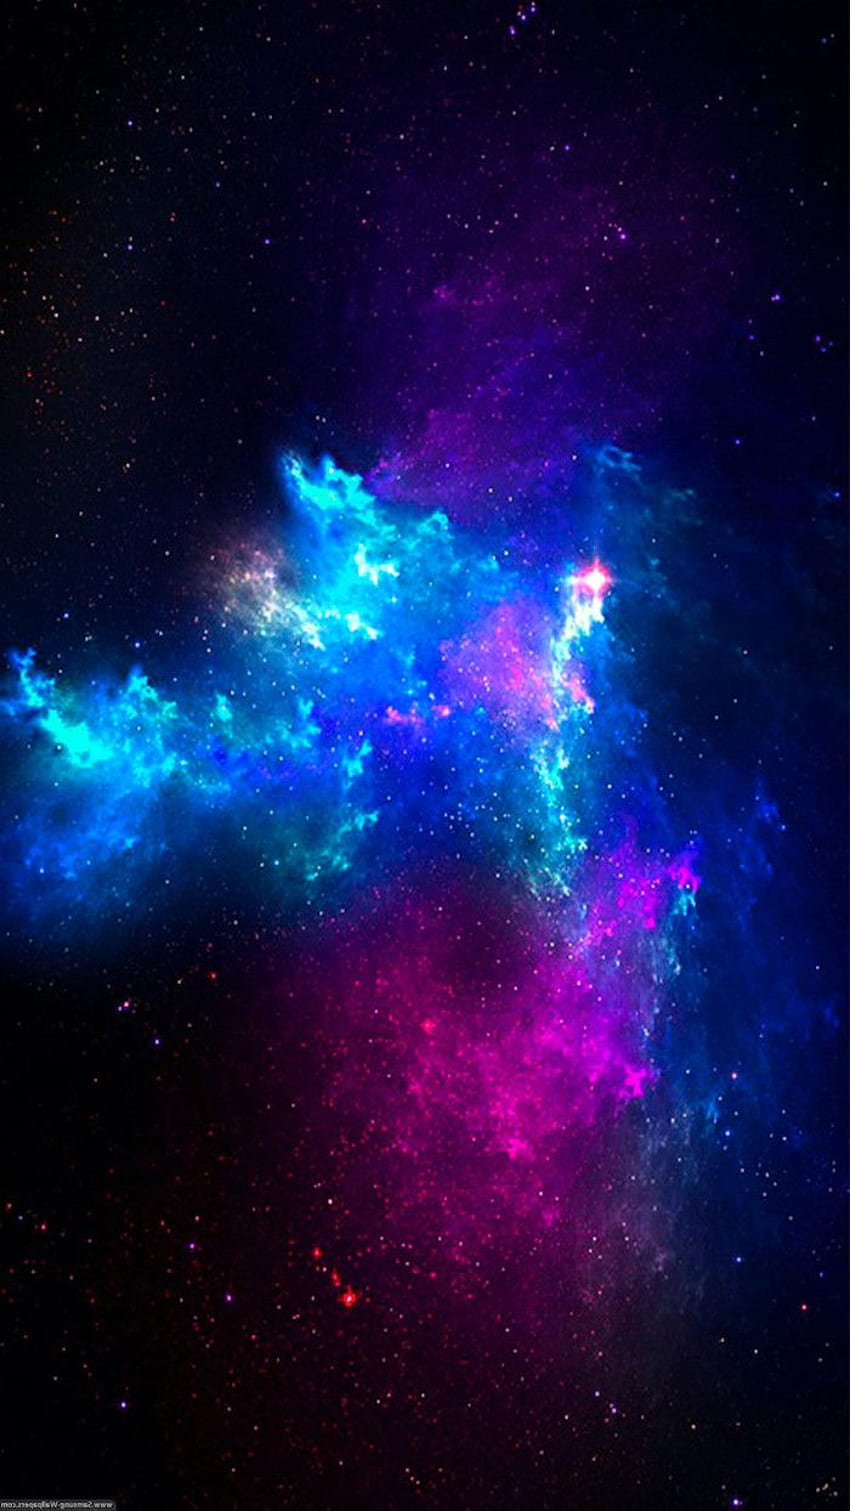 Iphone wallpaper galaxy - photo#20 - Galaxy